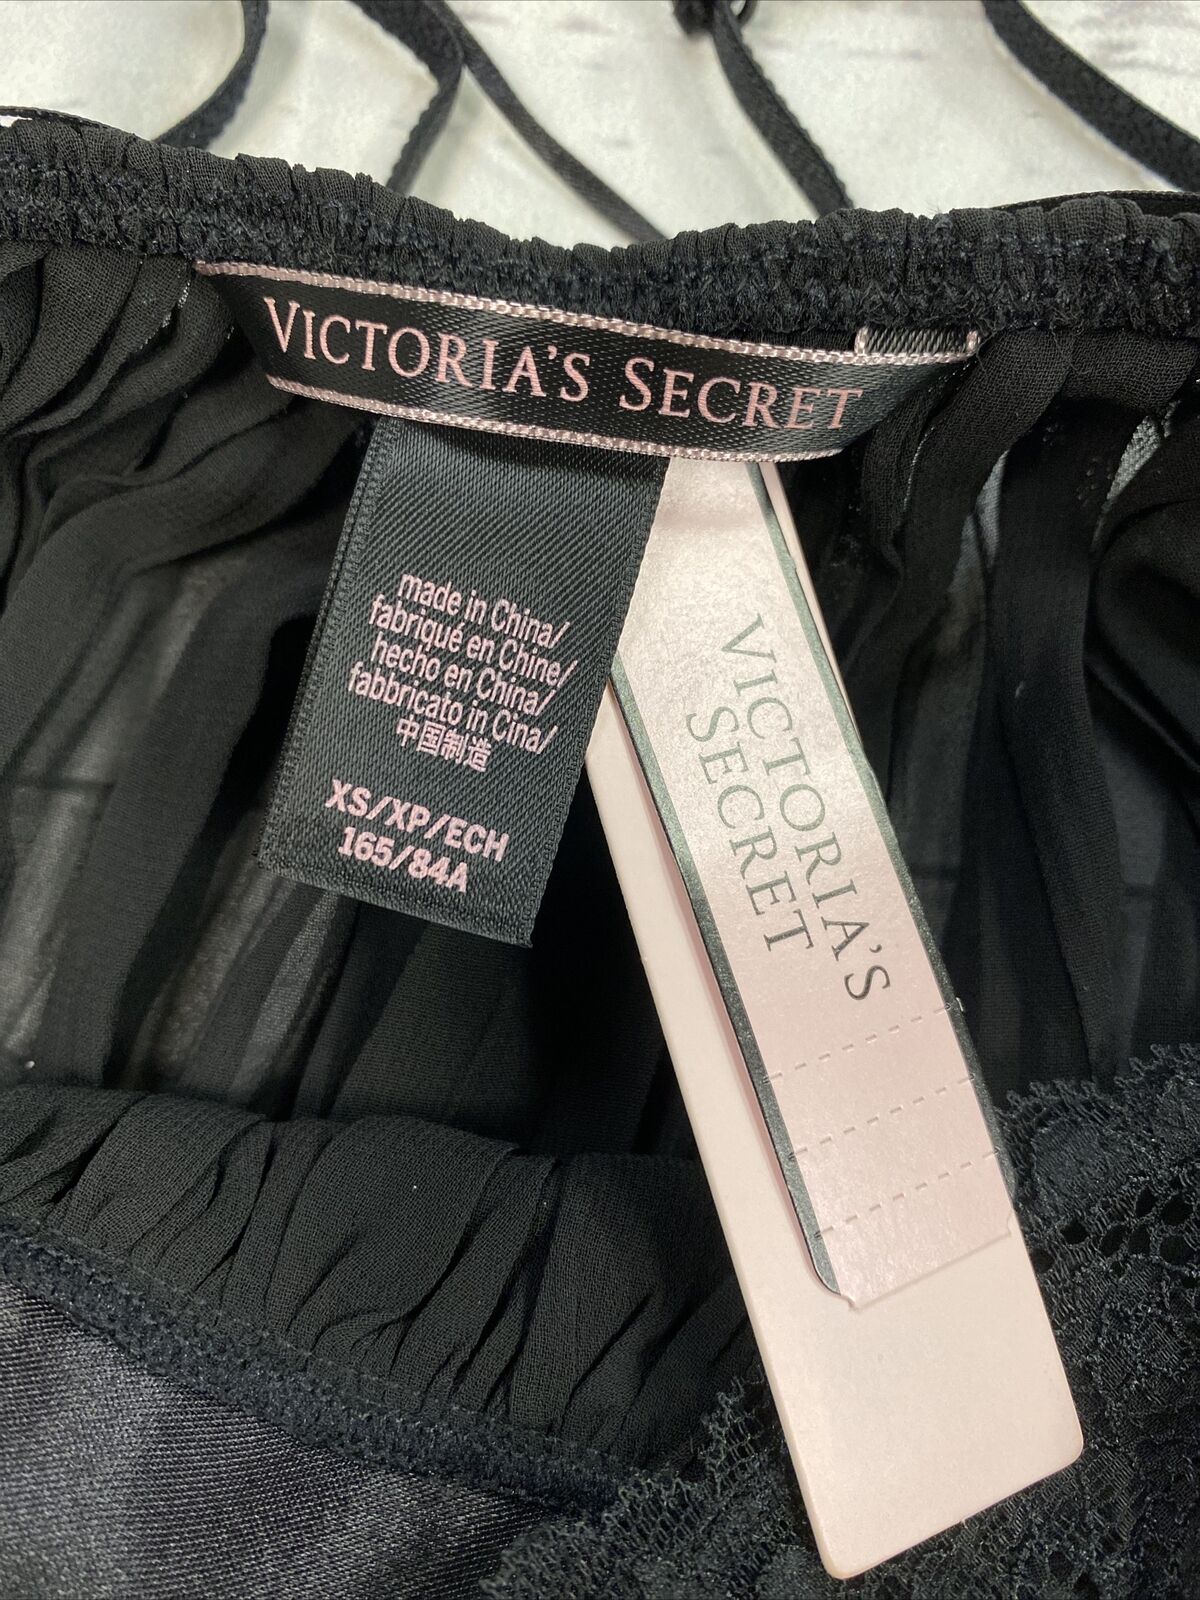 Stylish Black Two Piece Set from Victoria's Secret